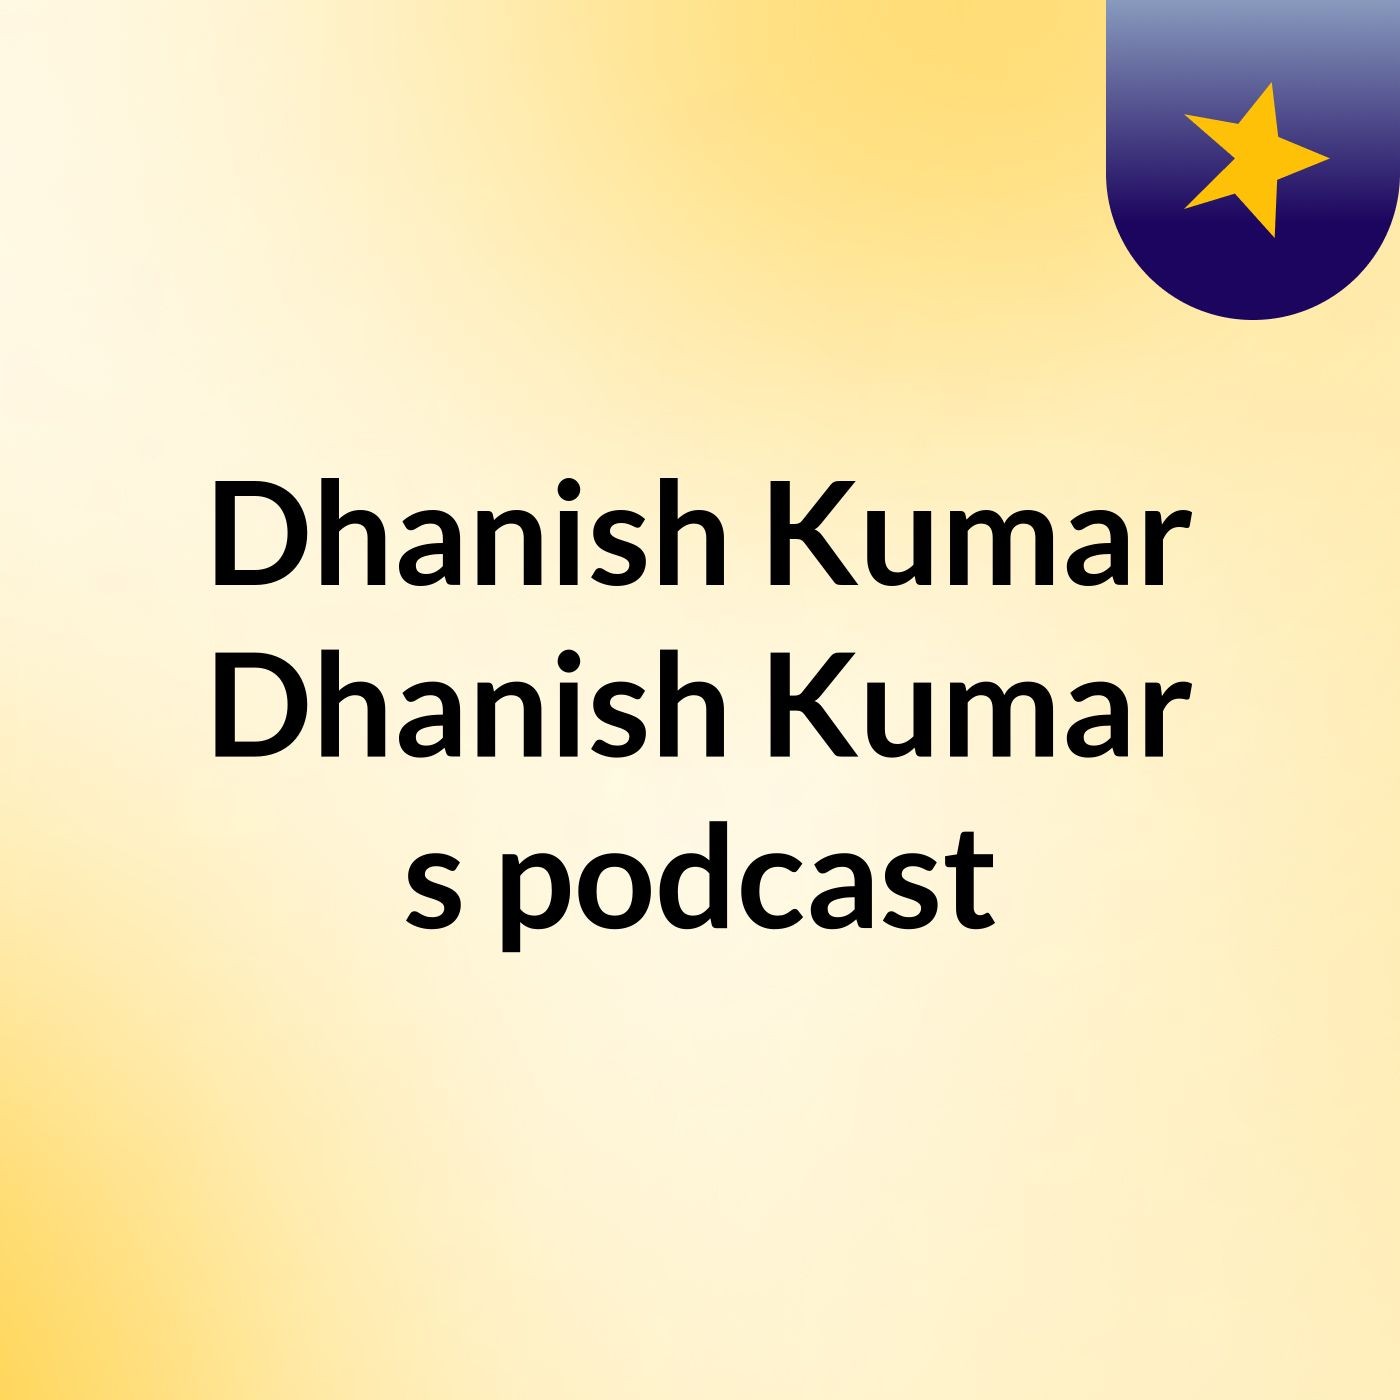 Dhanish Kumar Dhanish Kumar's podcast